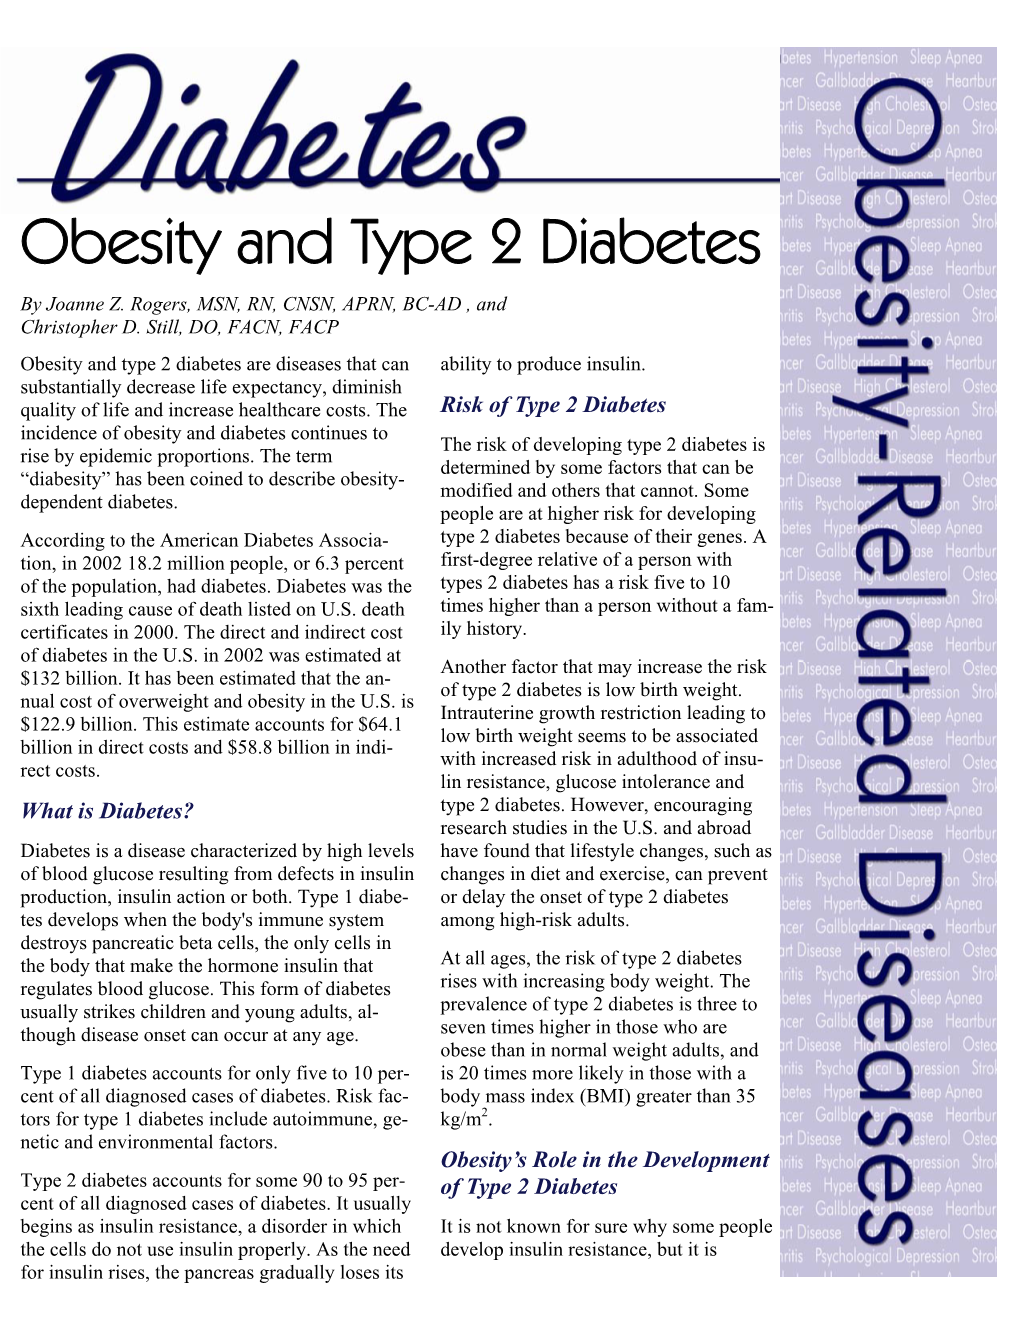 Obesity and Type 2 Diabetes by Joanne Z